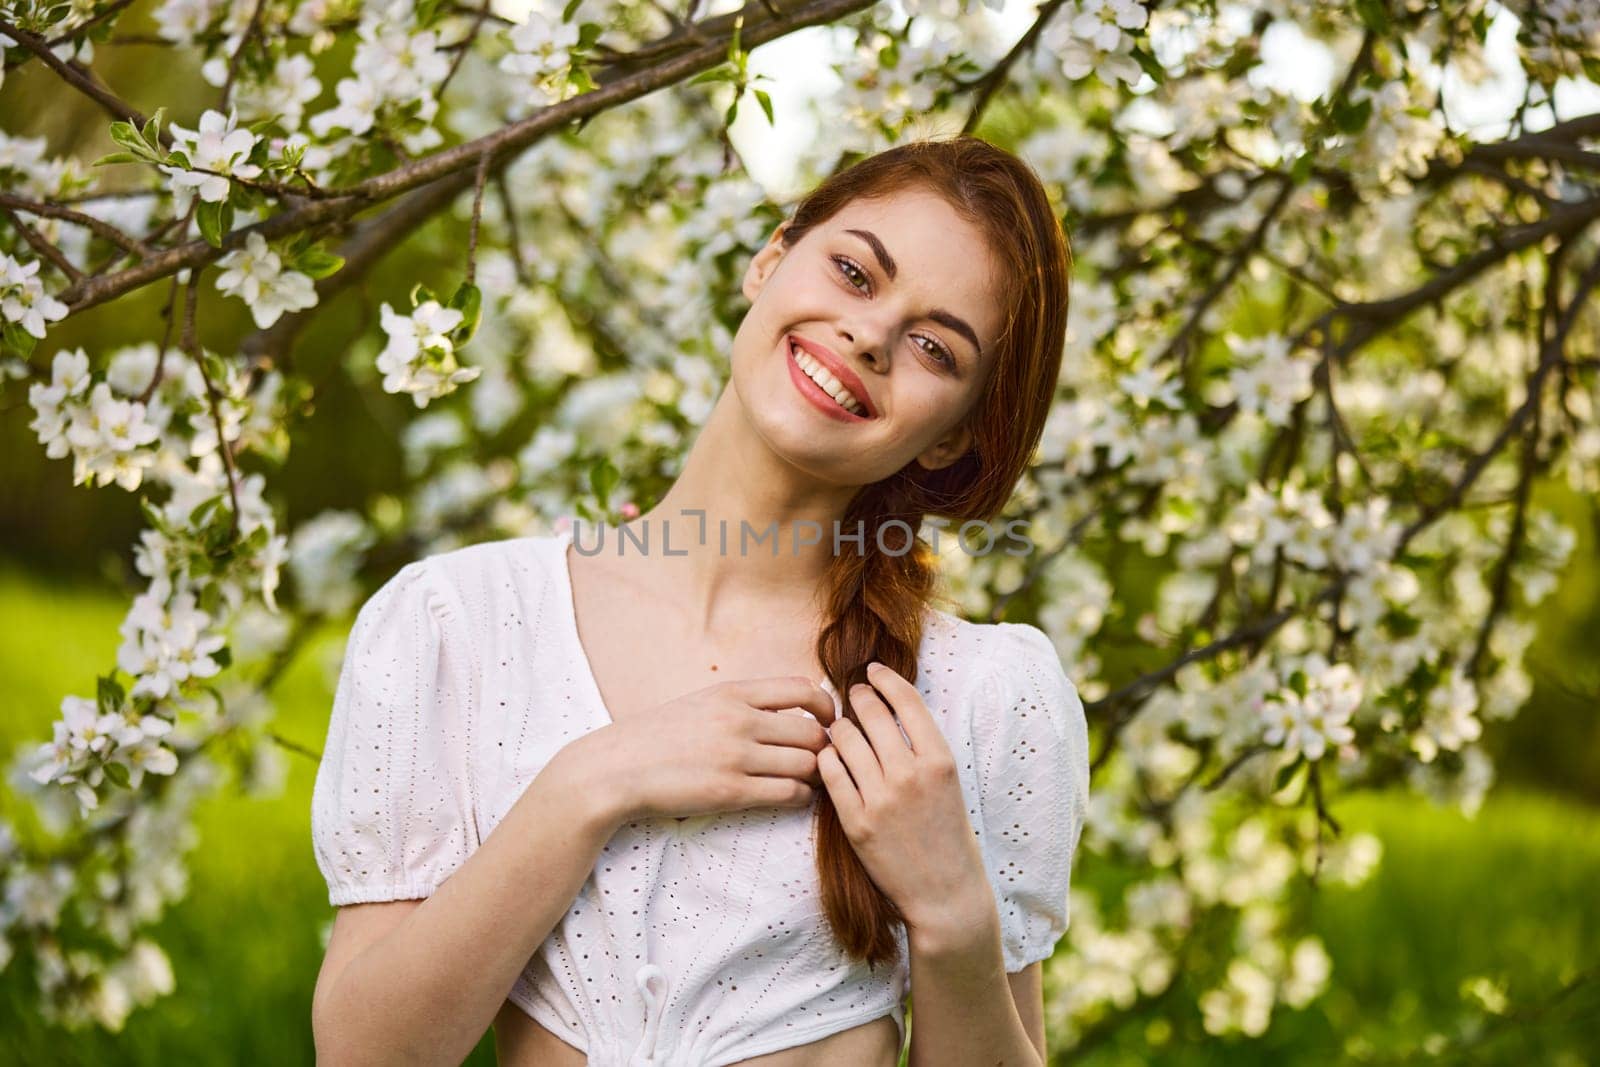 joyful woman posing standing next to a flowering tree enjoying nature by Vichizh